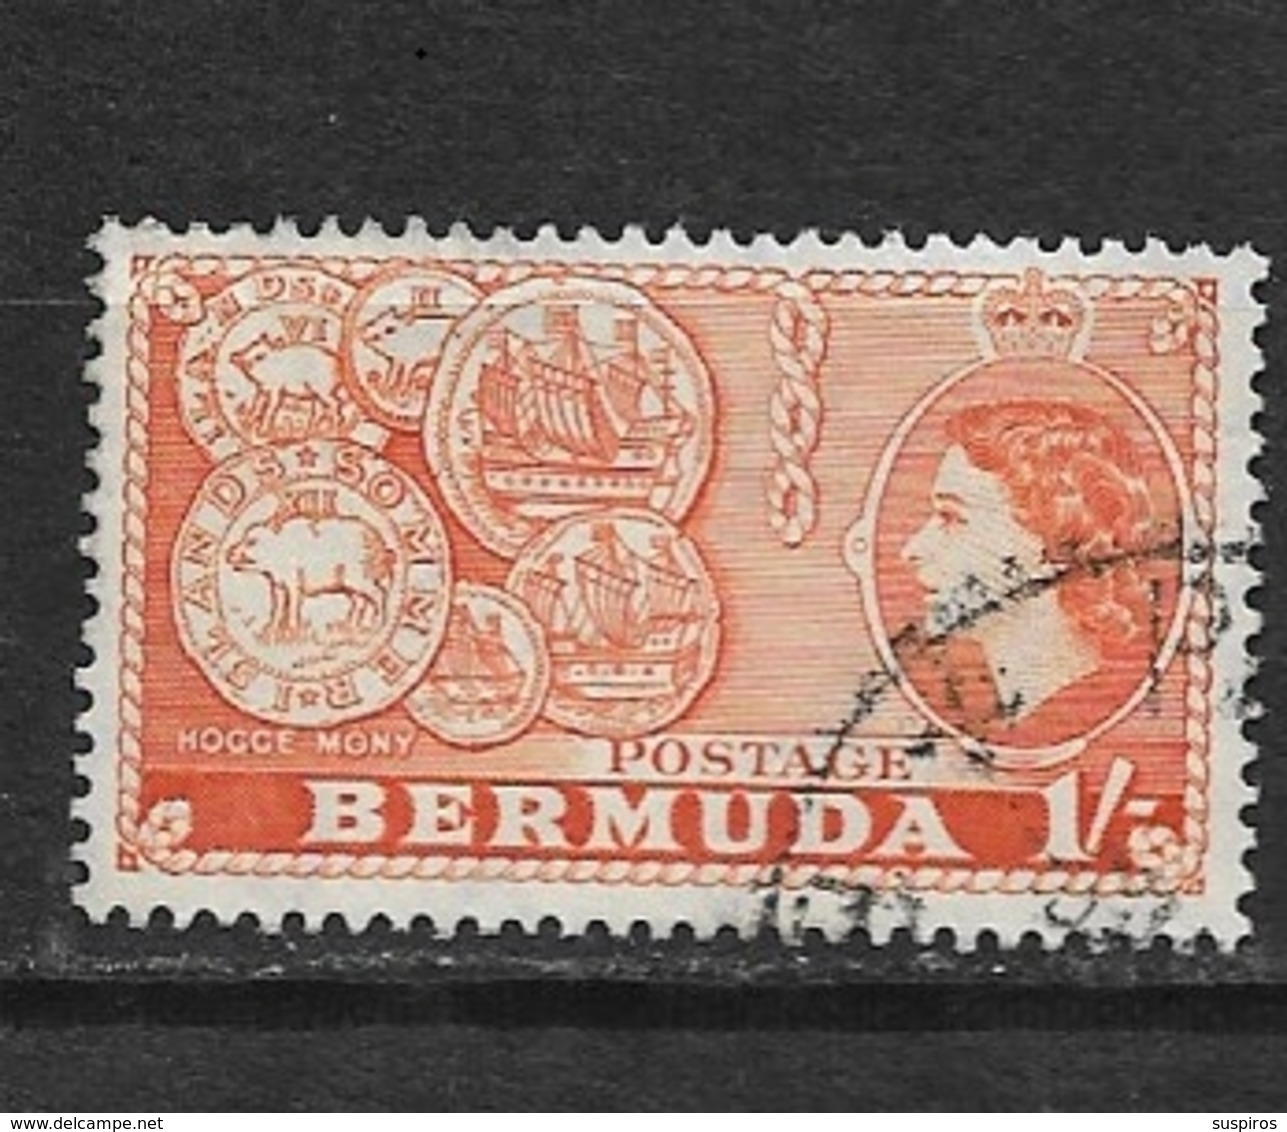 BERMUDA   1953 Local Motives And Queen Elizabeth II   USED  #144 - Bermuda